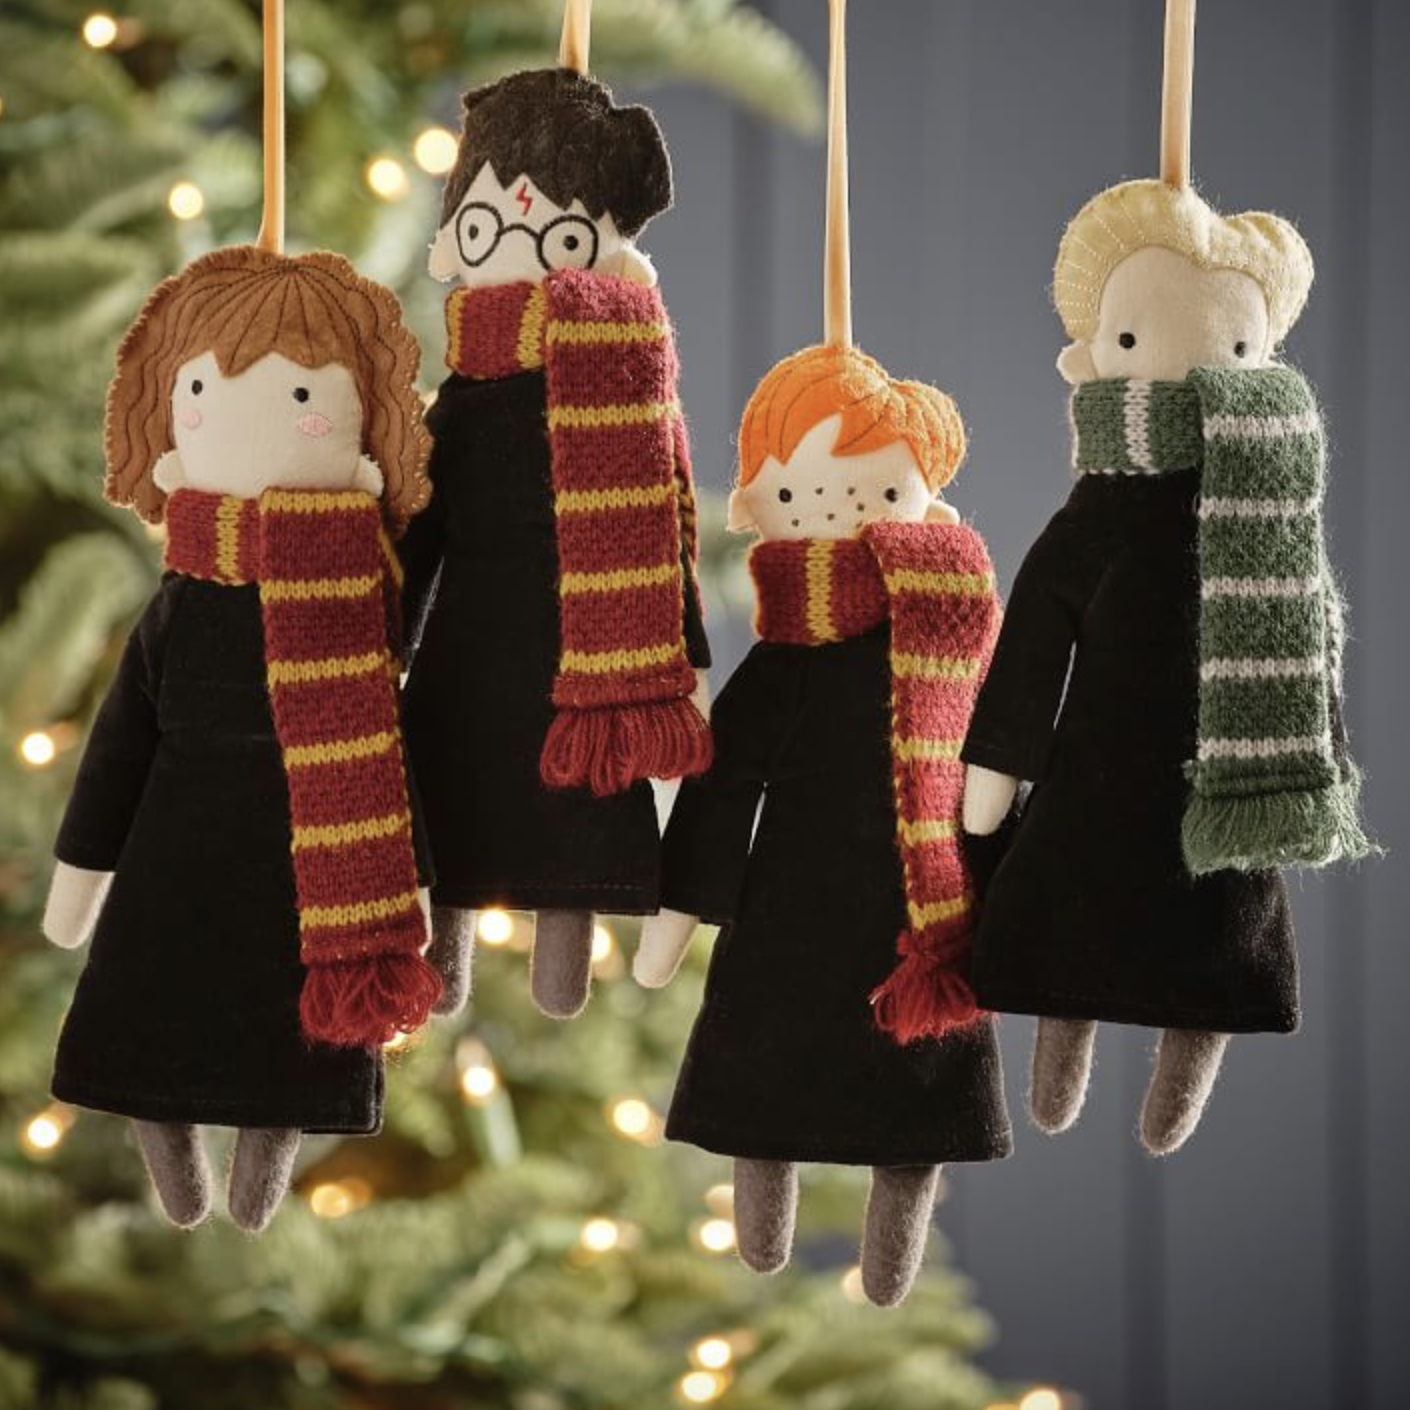 27 Best Harry Potter Ornaments - Harry Potter Christmas Tree Ideas